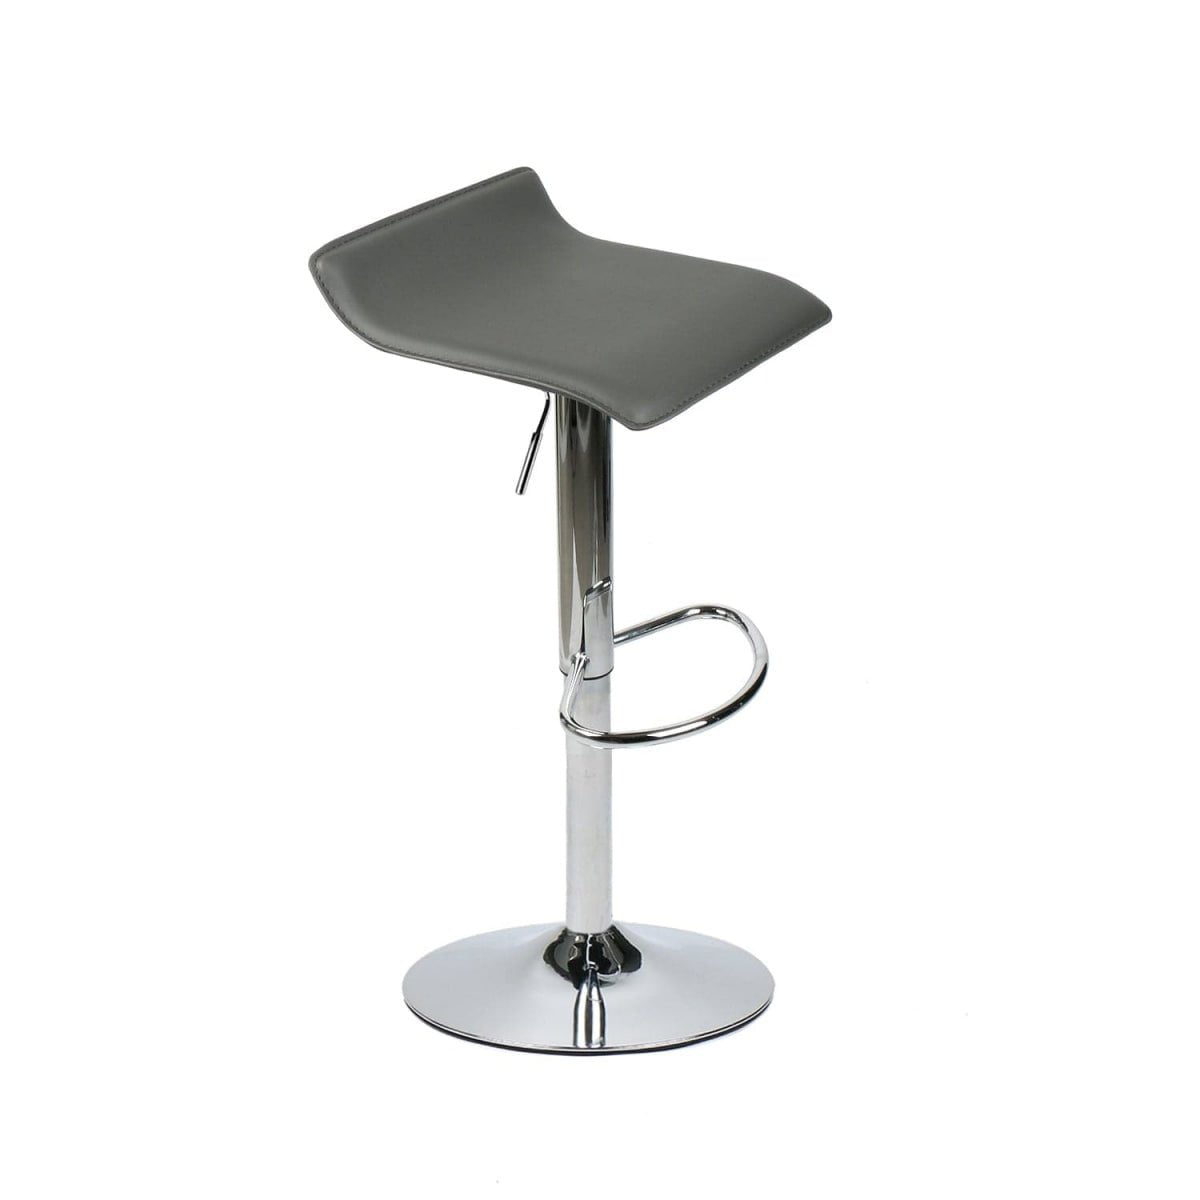 Elecwish grey bar stool OW002